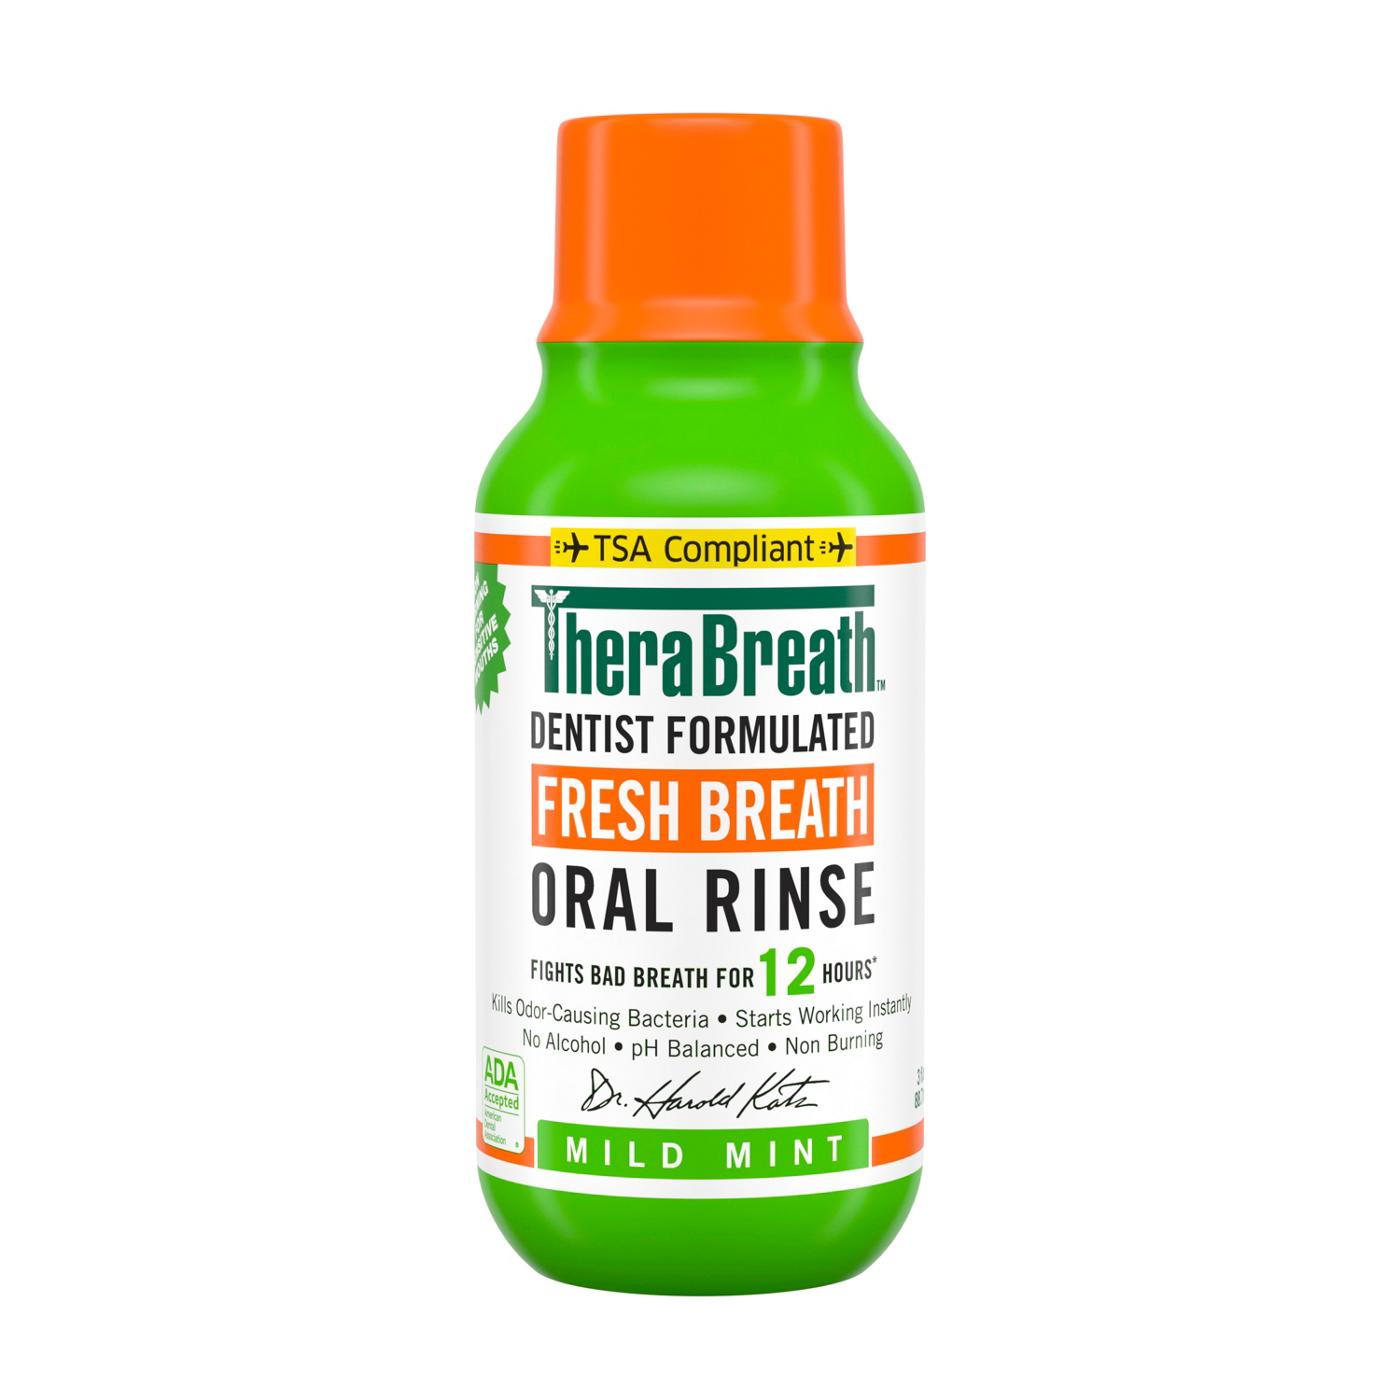 TheraBreath Travel Size Fresh Breath Oral Rinse - Mild Mint; image 1 of 2